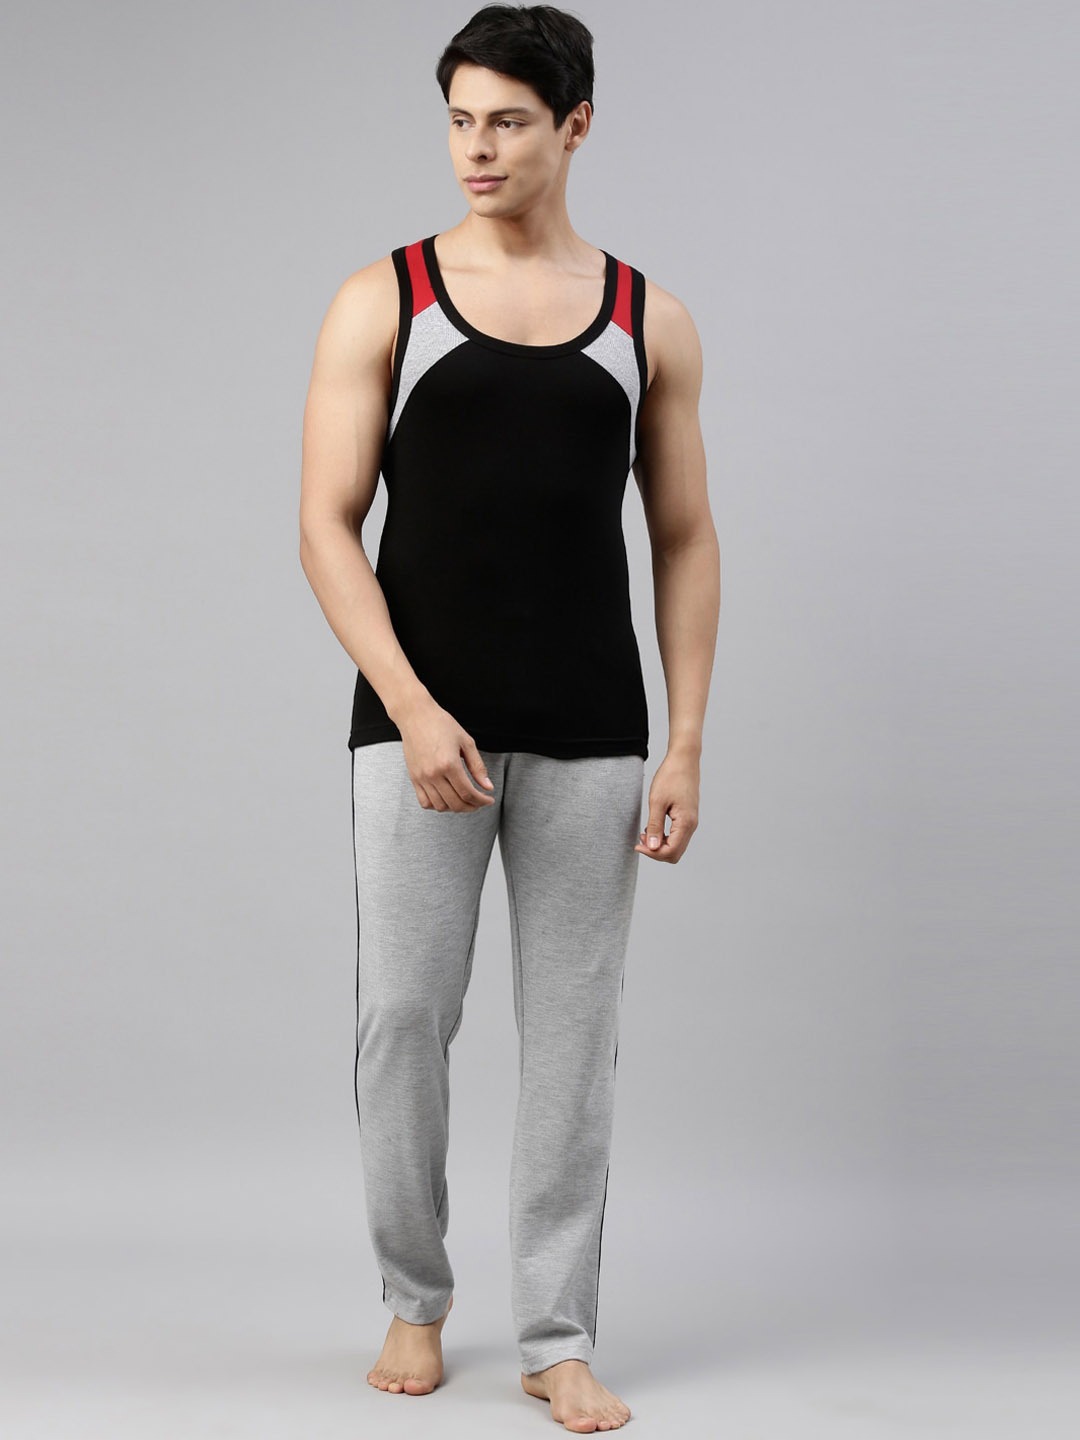 Clothing Innerwear Vests | DIXCY SCOTT Men Black & Navy Blue Solid Cotton Innerwear Gym Vests Pack Of 2 - FF61386